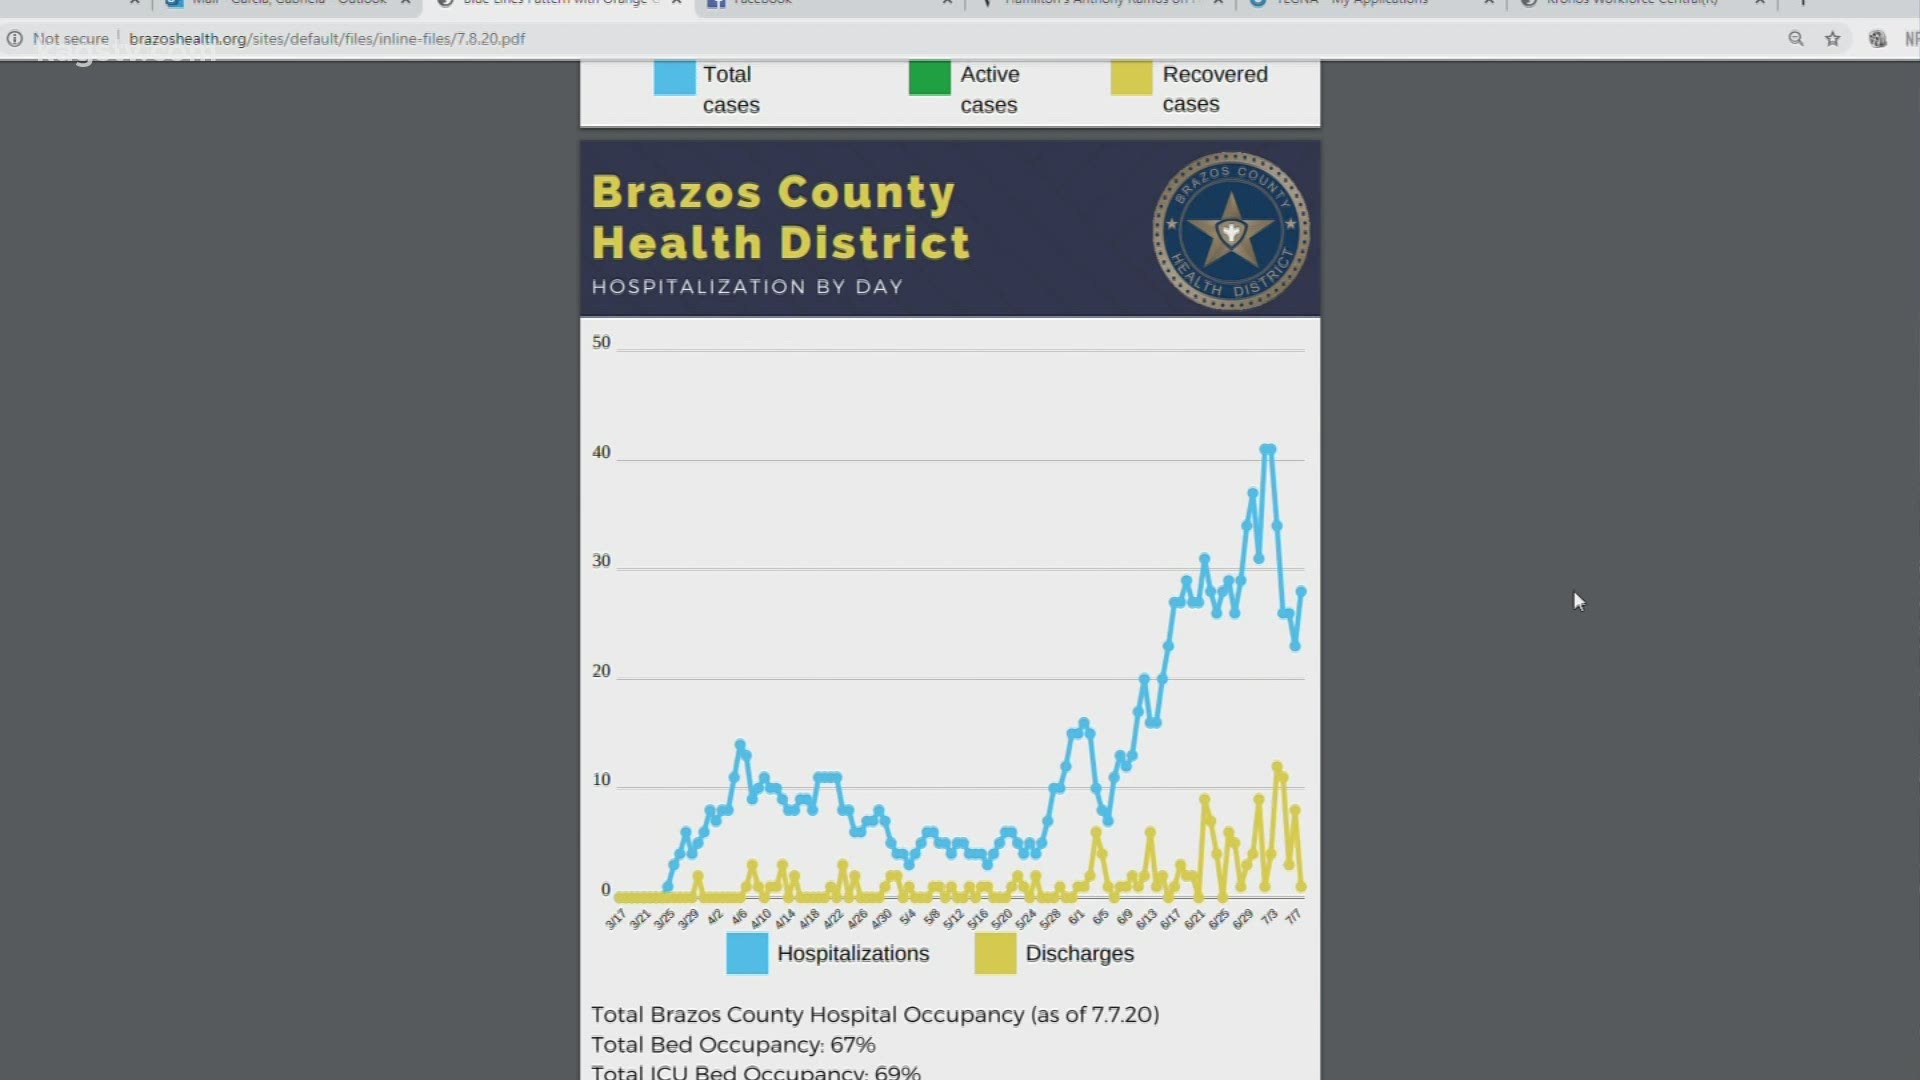 Dr. Sullivan breaks down positivity rate in Brazos County